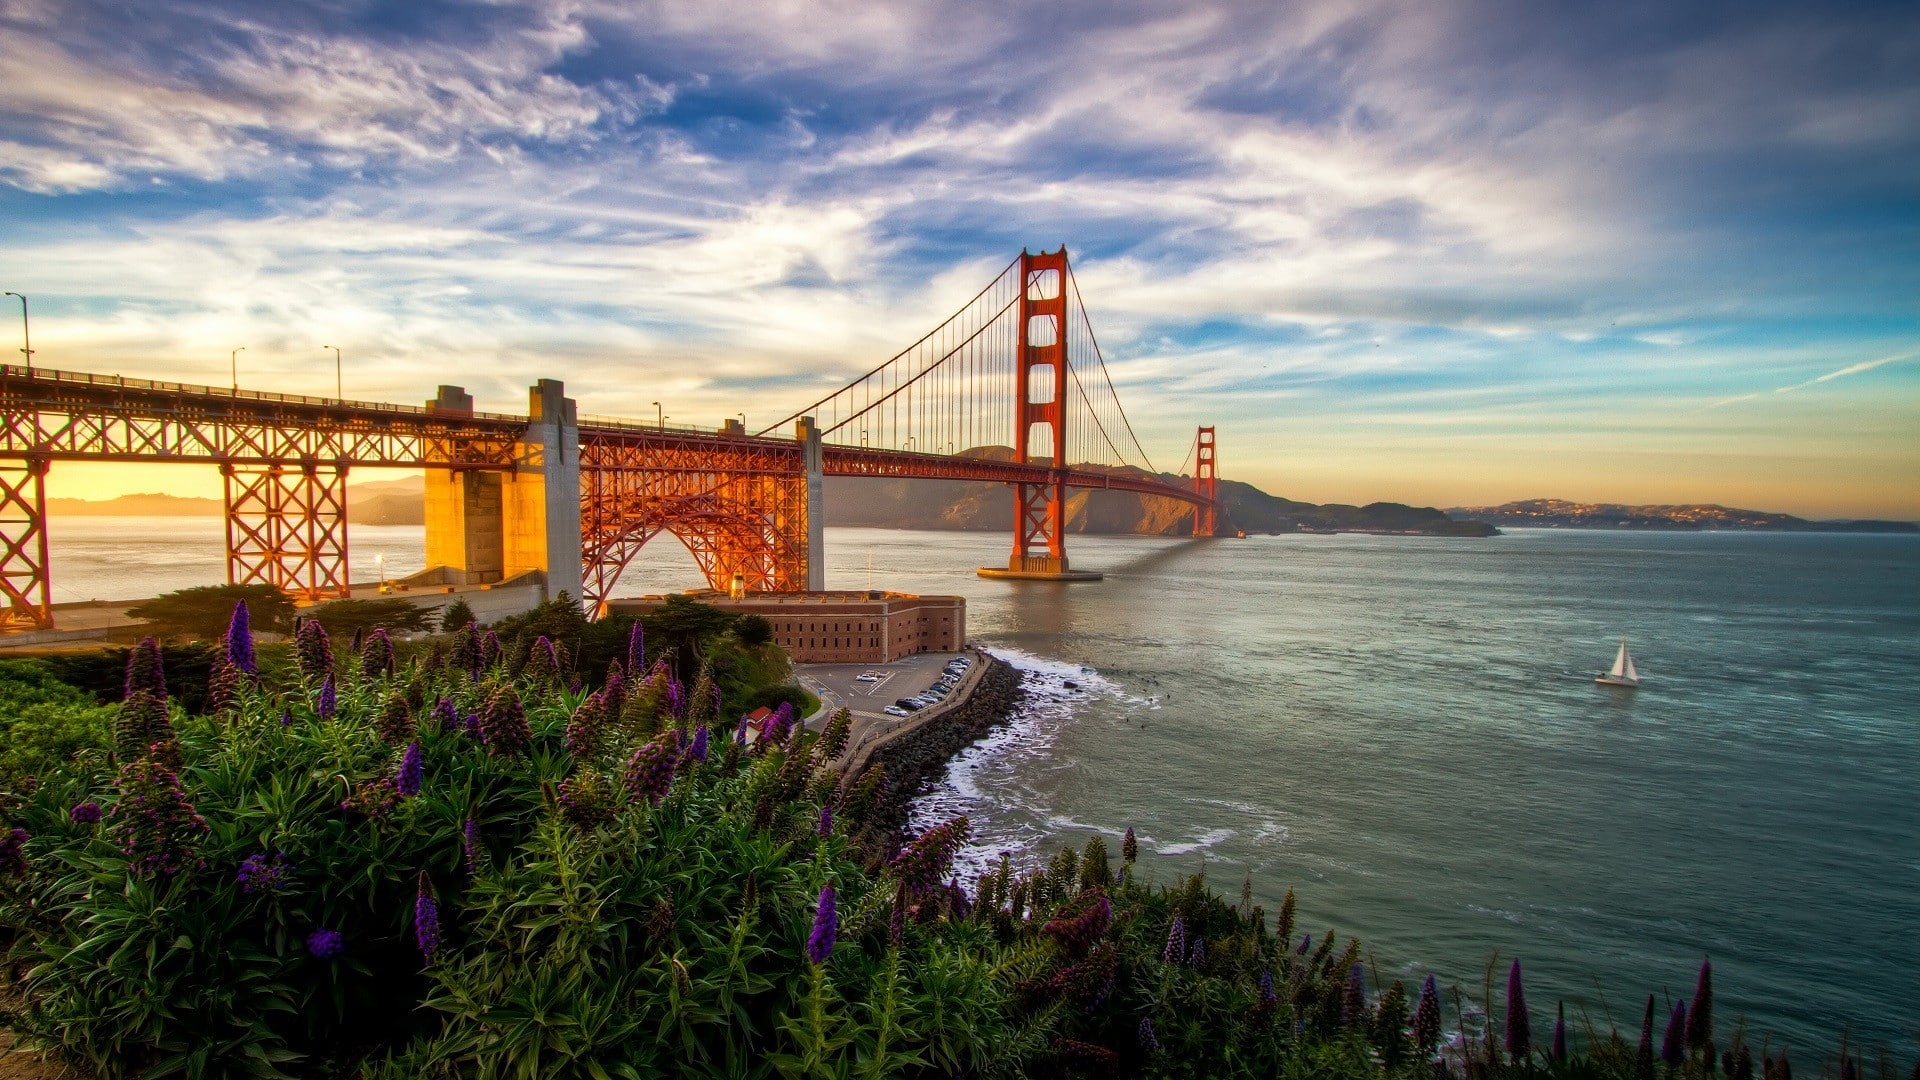 Golden Gate Bridge, sea, architecture, clouds, landscape, San Francisco Bay